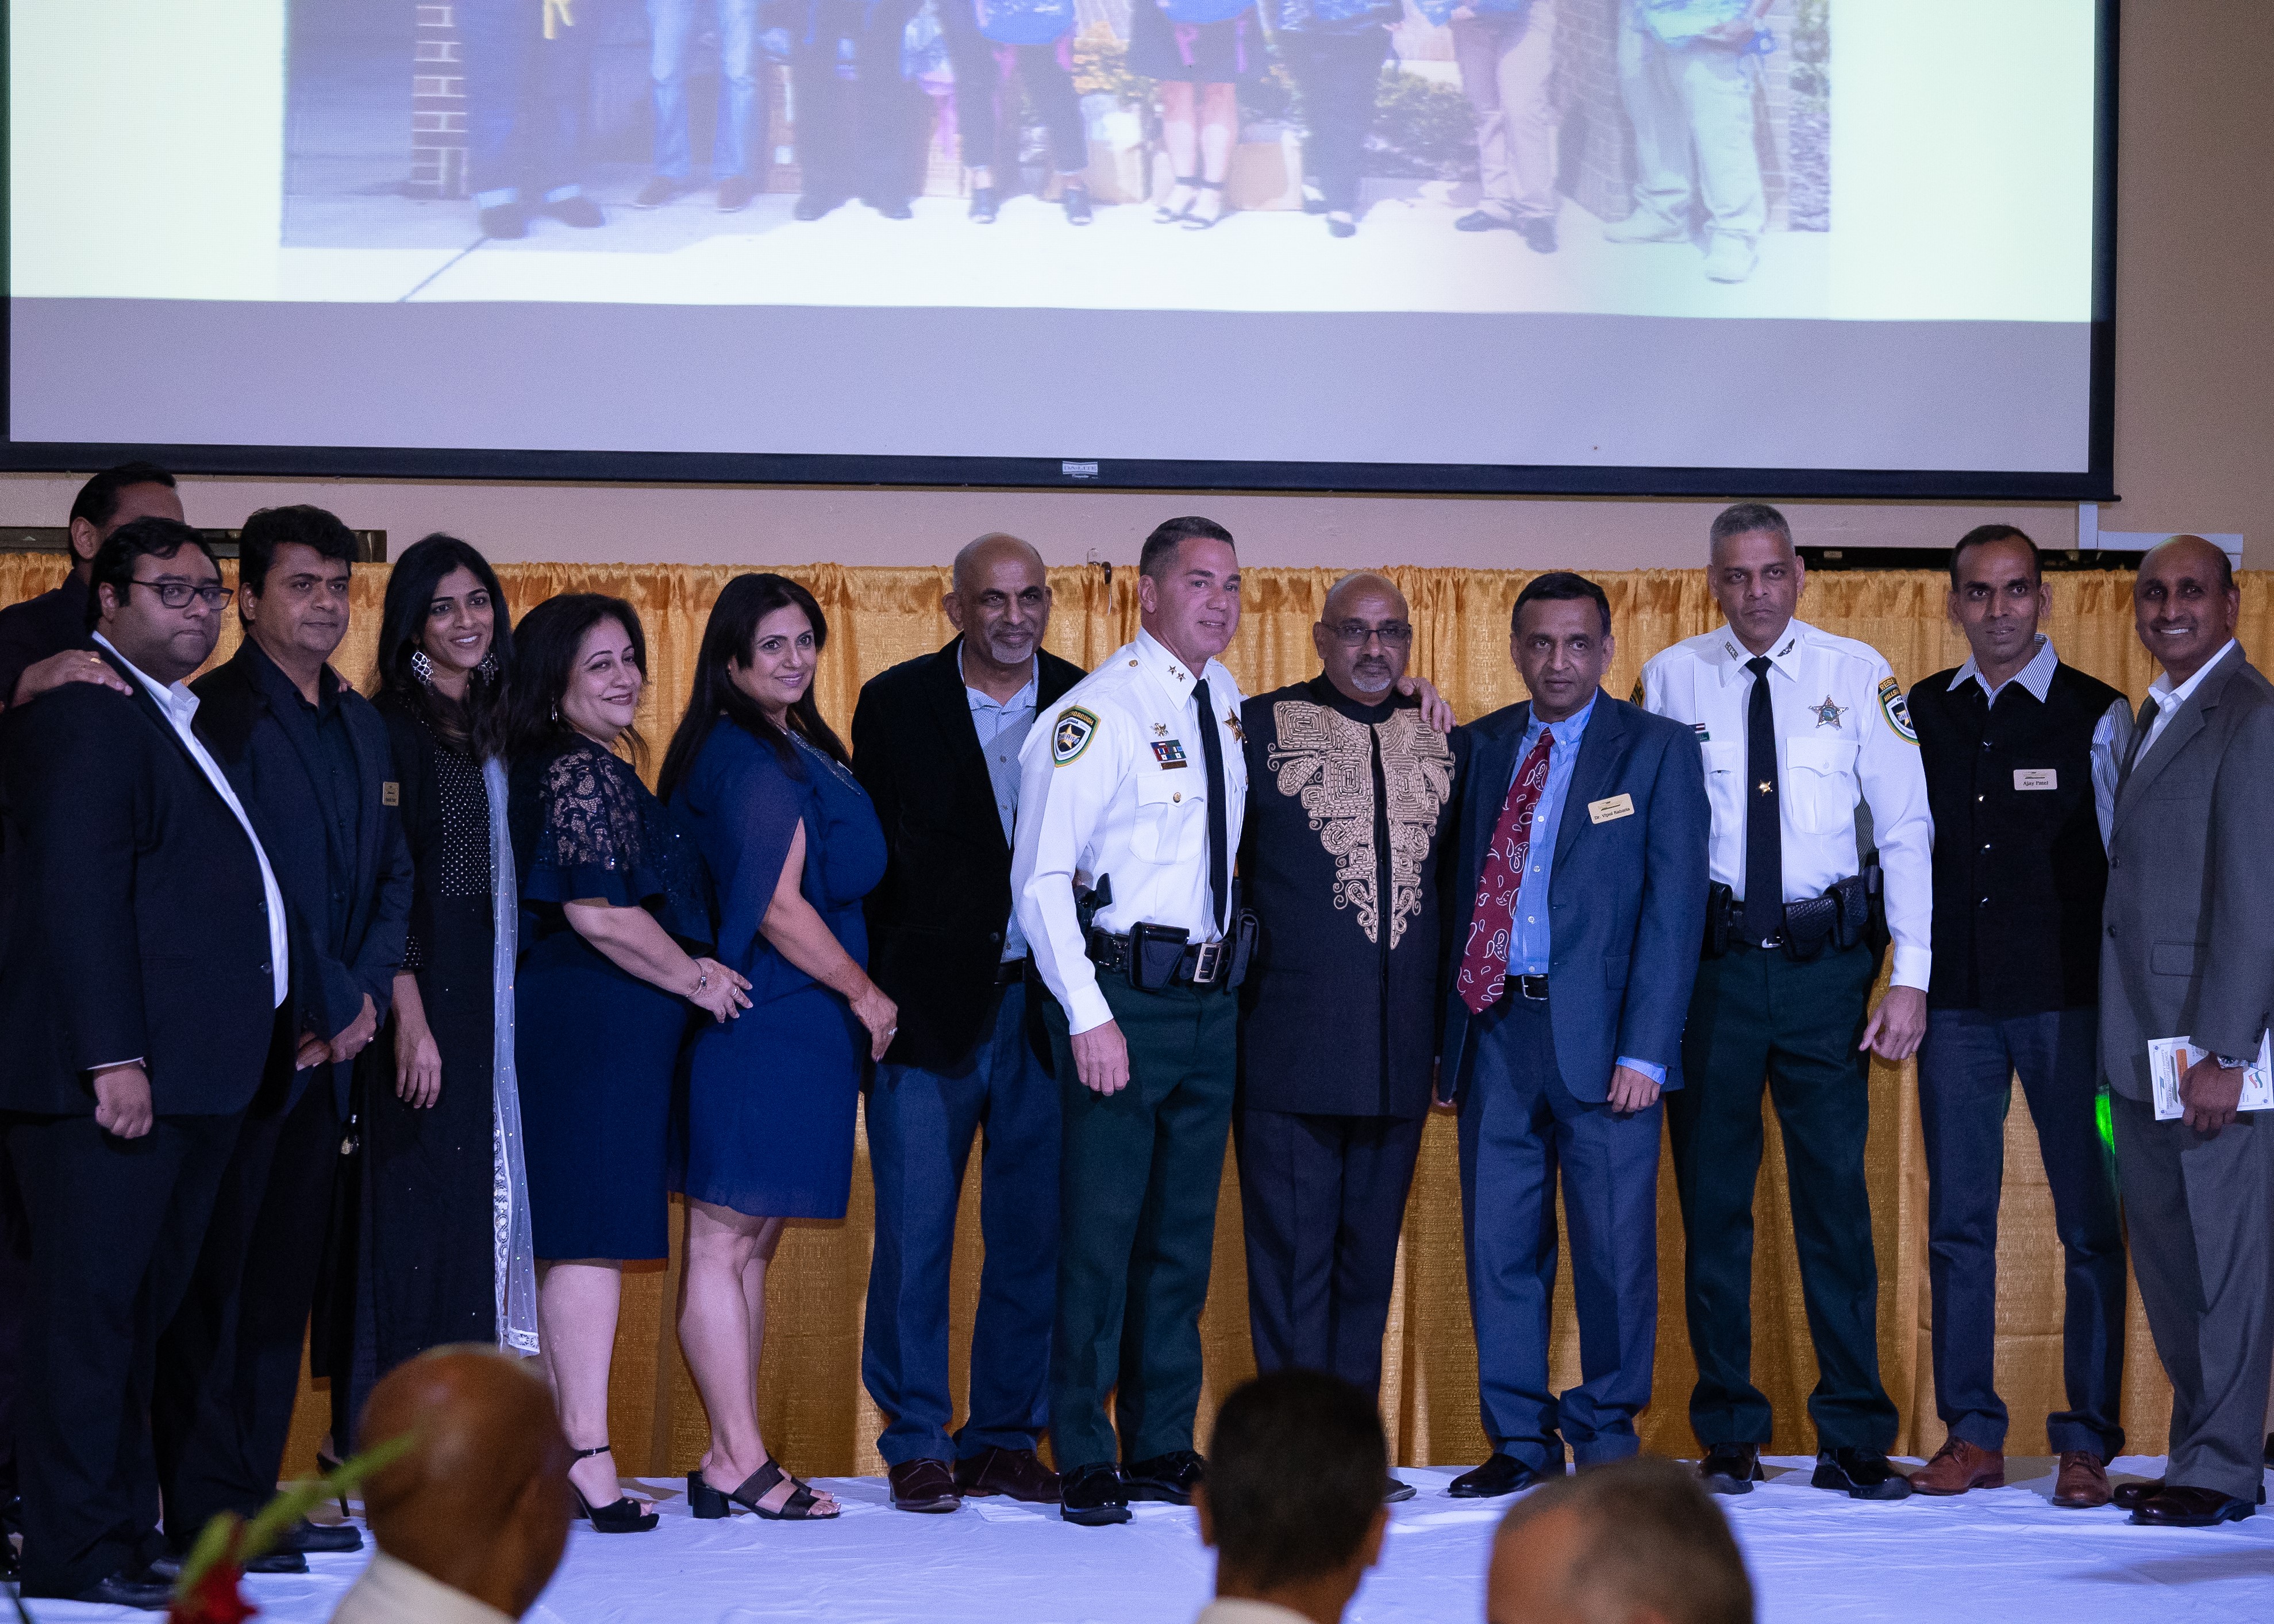 Sheriff's Indian Advisory Council Leadership Team 2021